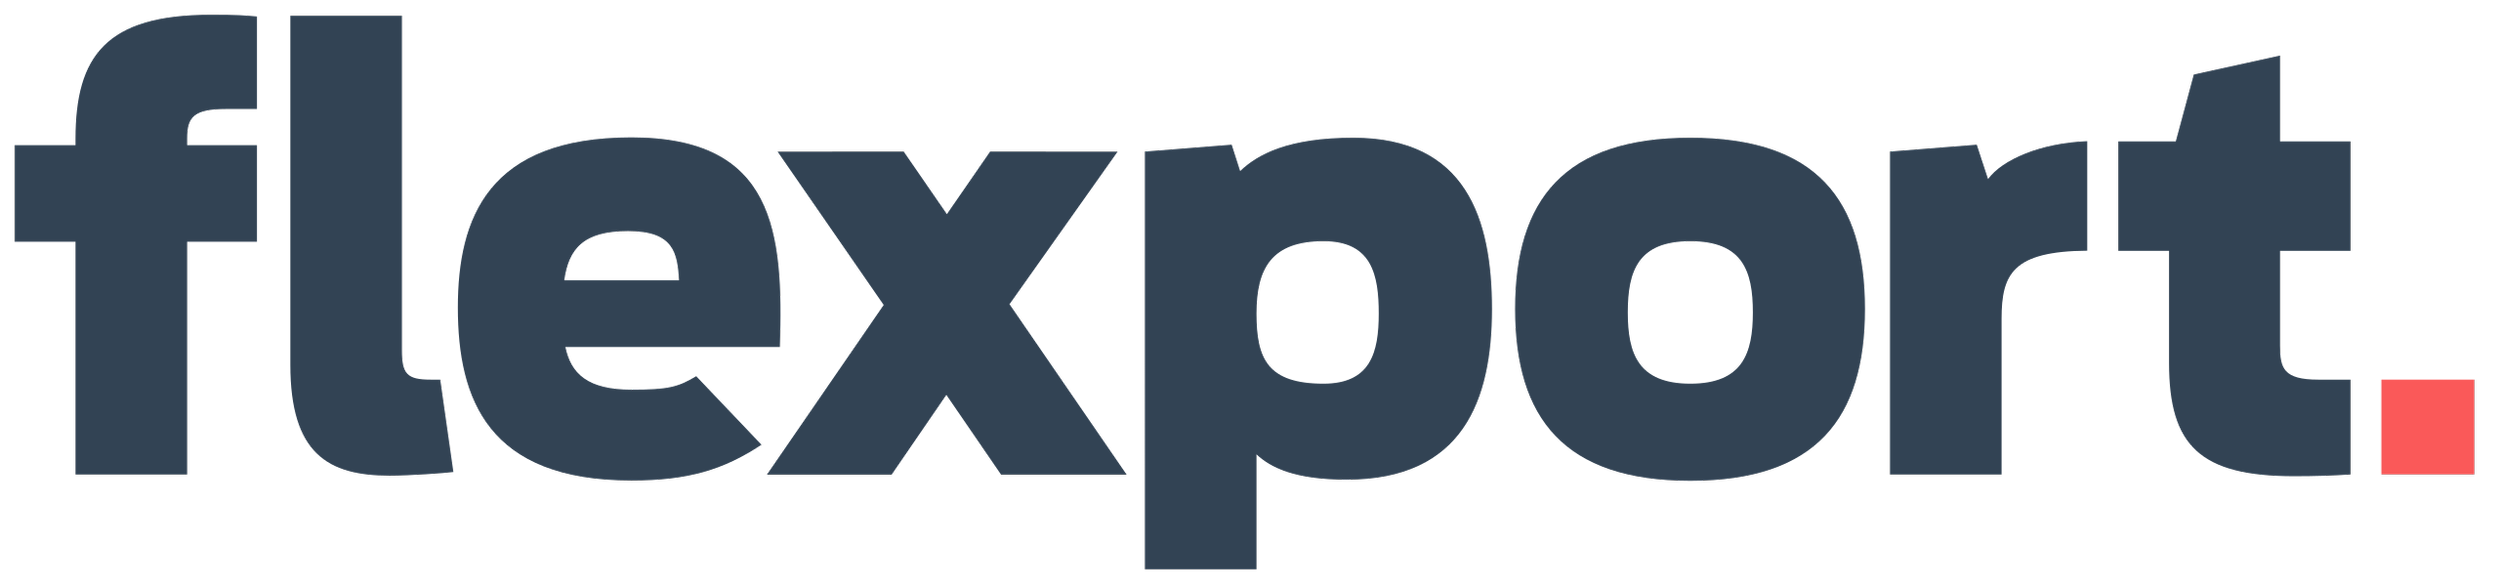 2560px-Flexport_logo.svg.png